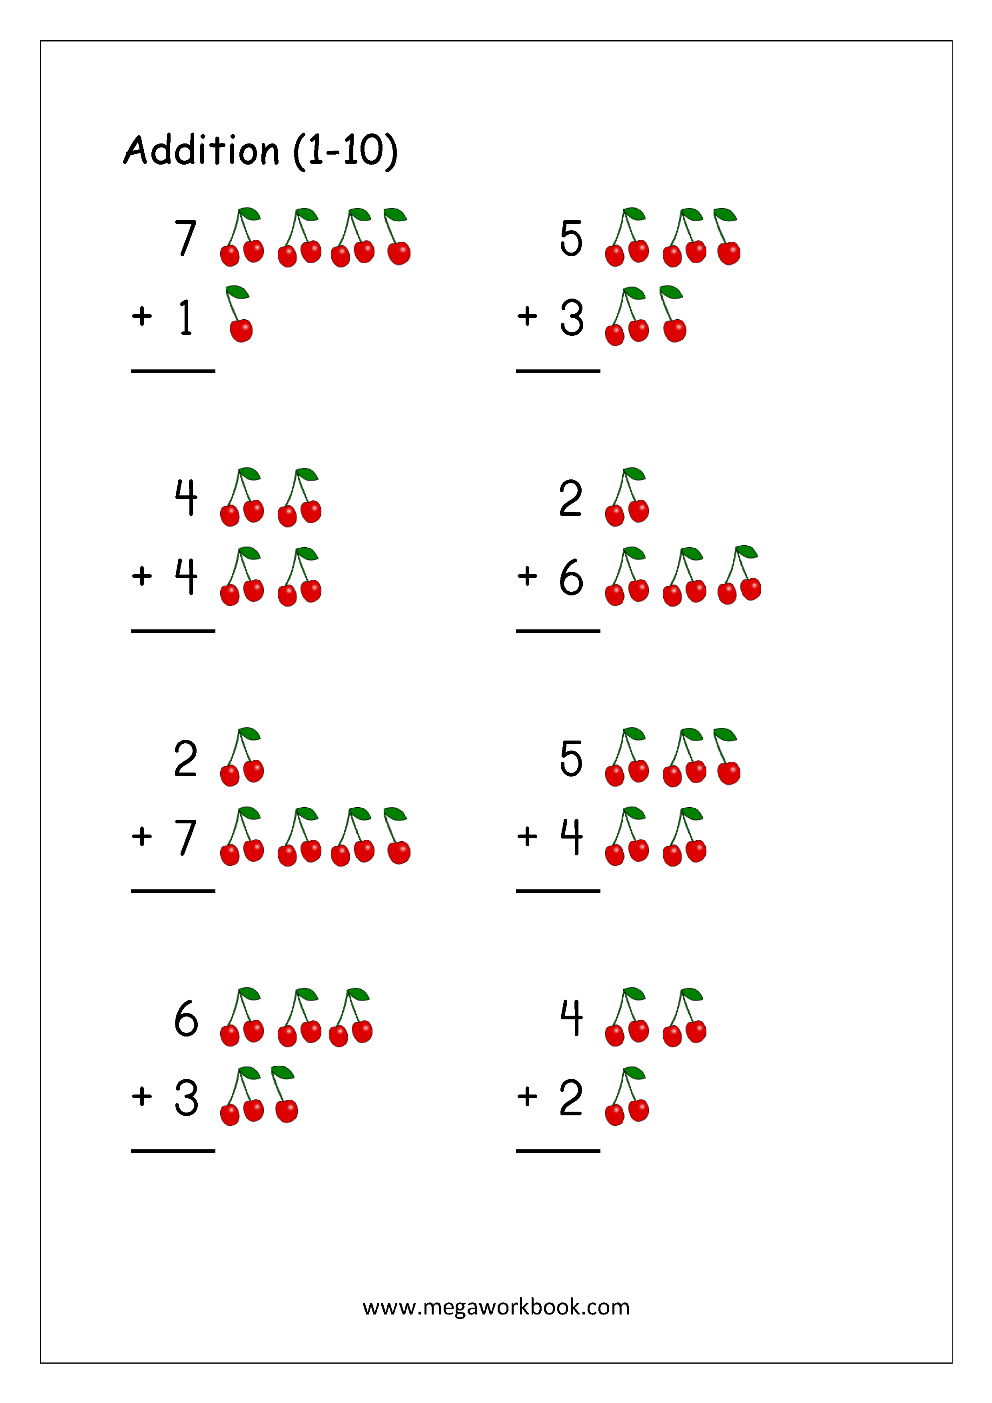 kindergarten-addition-worksheets-free-addition-worksheets-for-kindergarten-math-addition